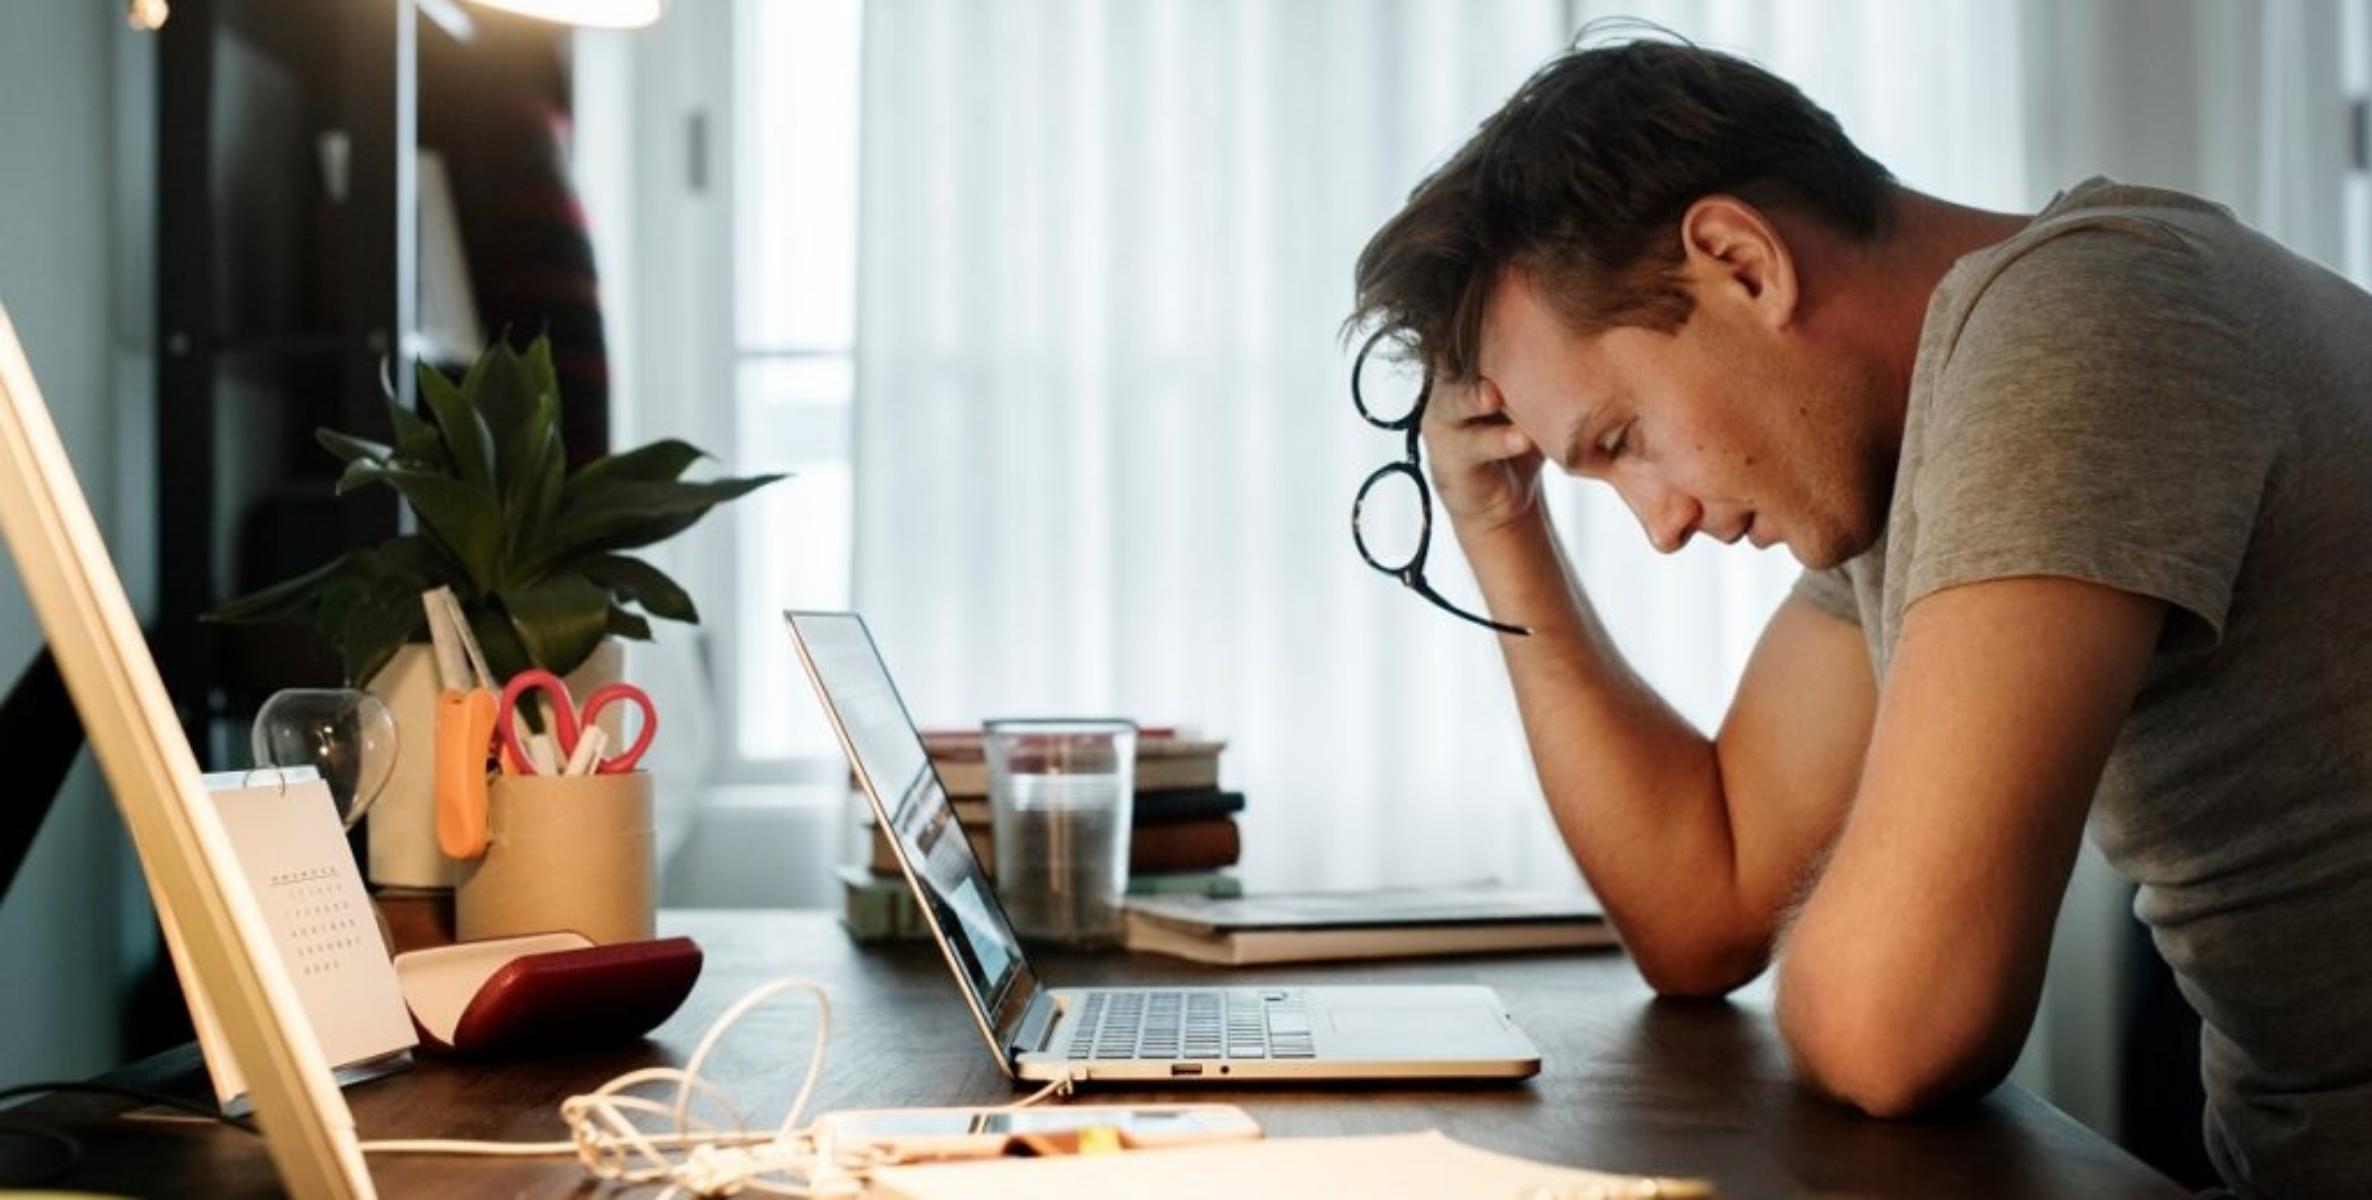 Avoid migraine-related headaches